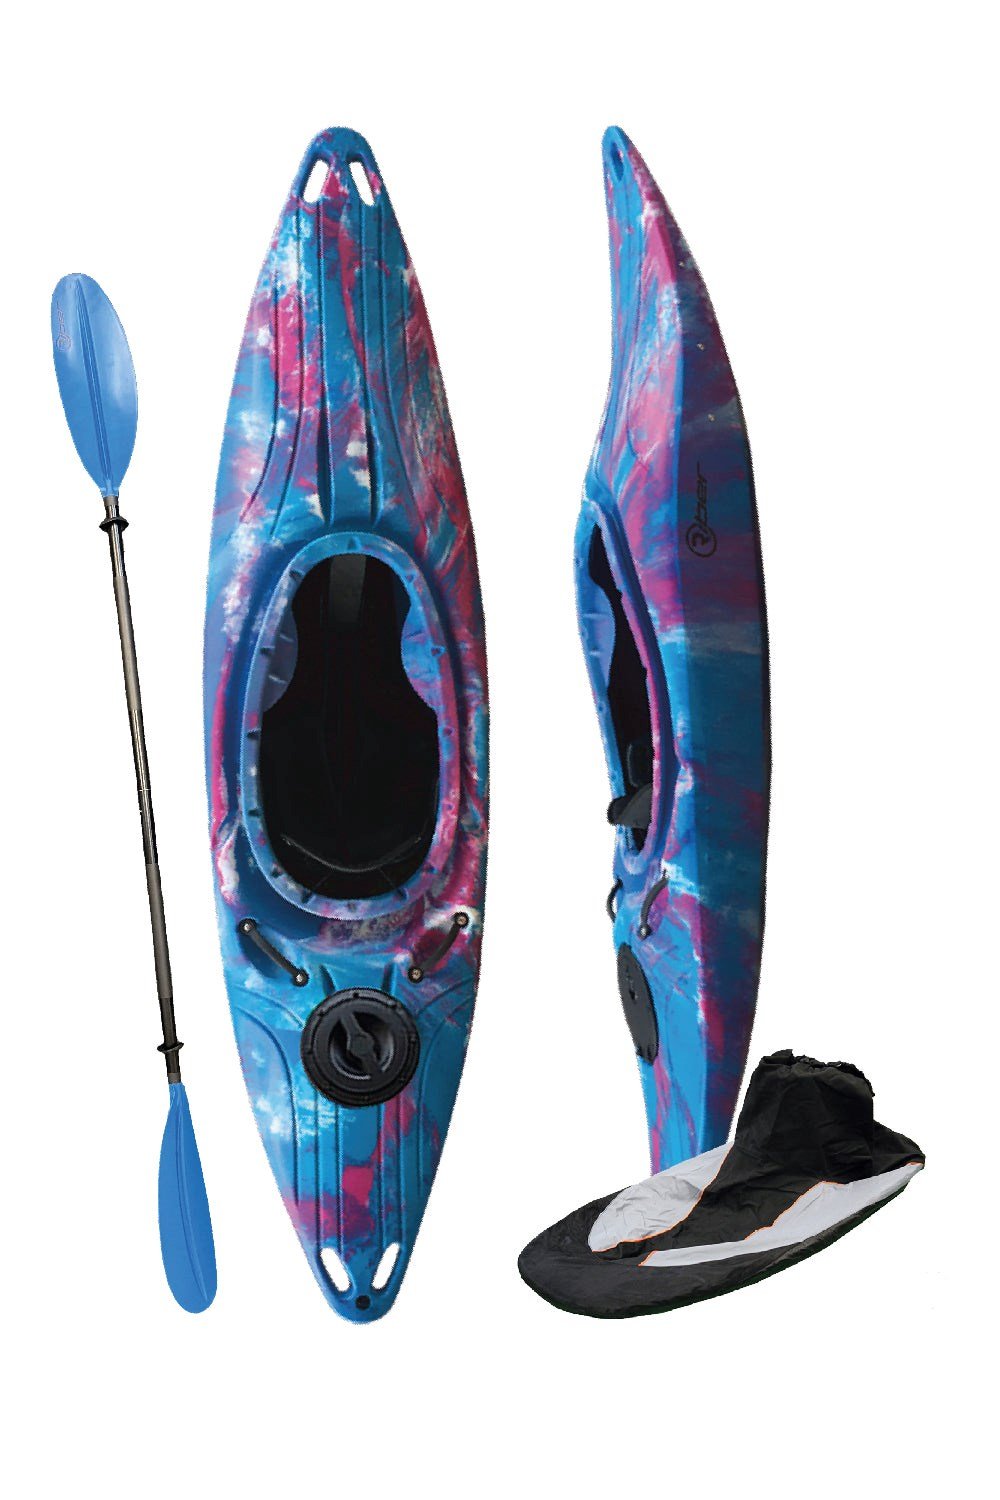 White Water Tourer Kayak With PaddleandSpraydeck -